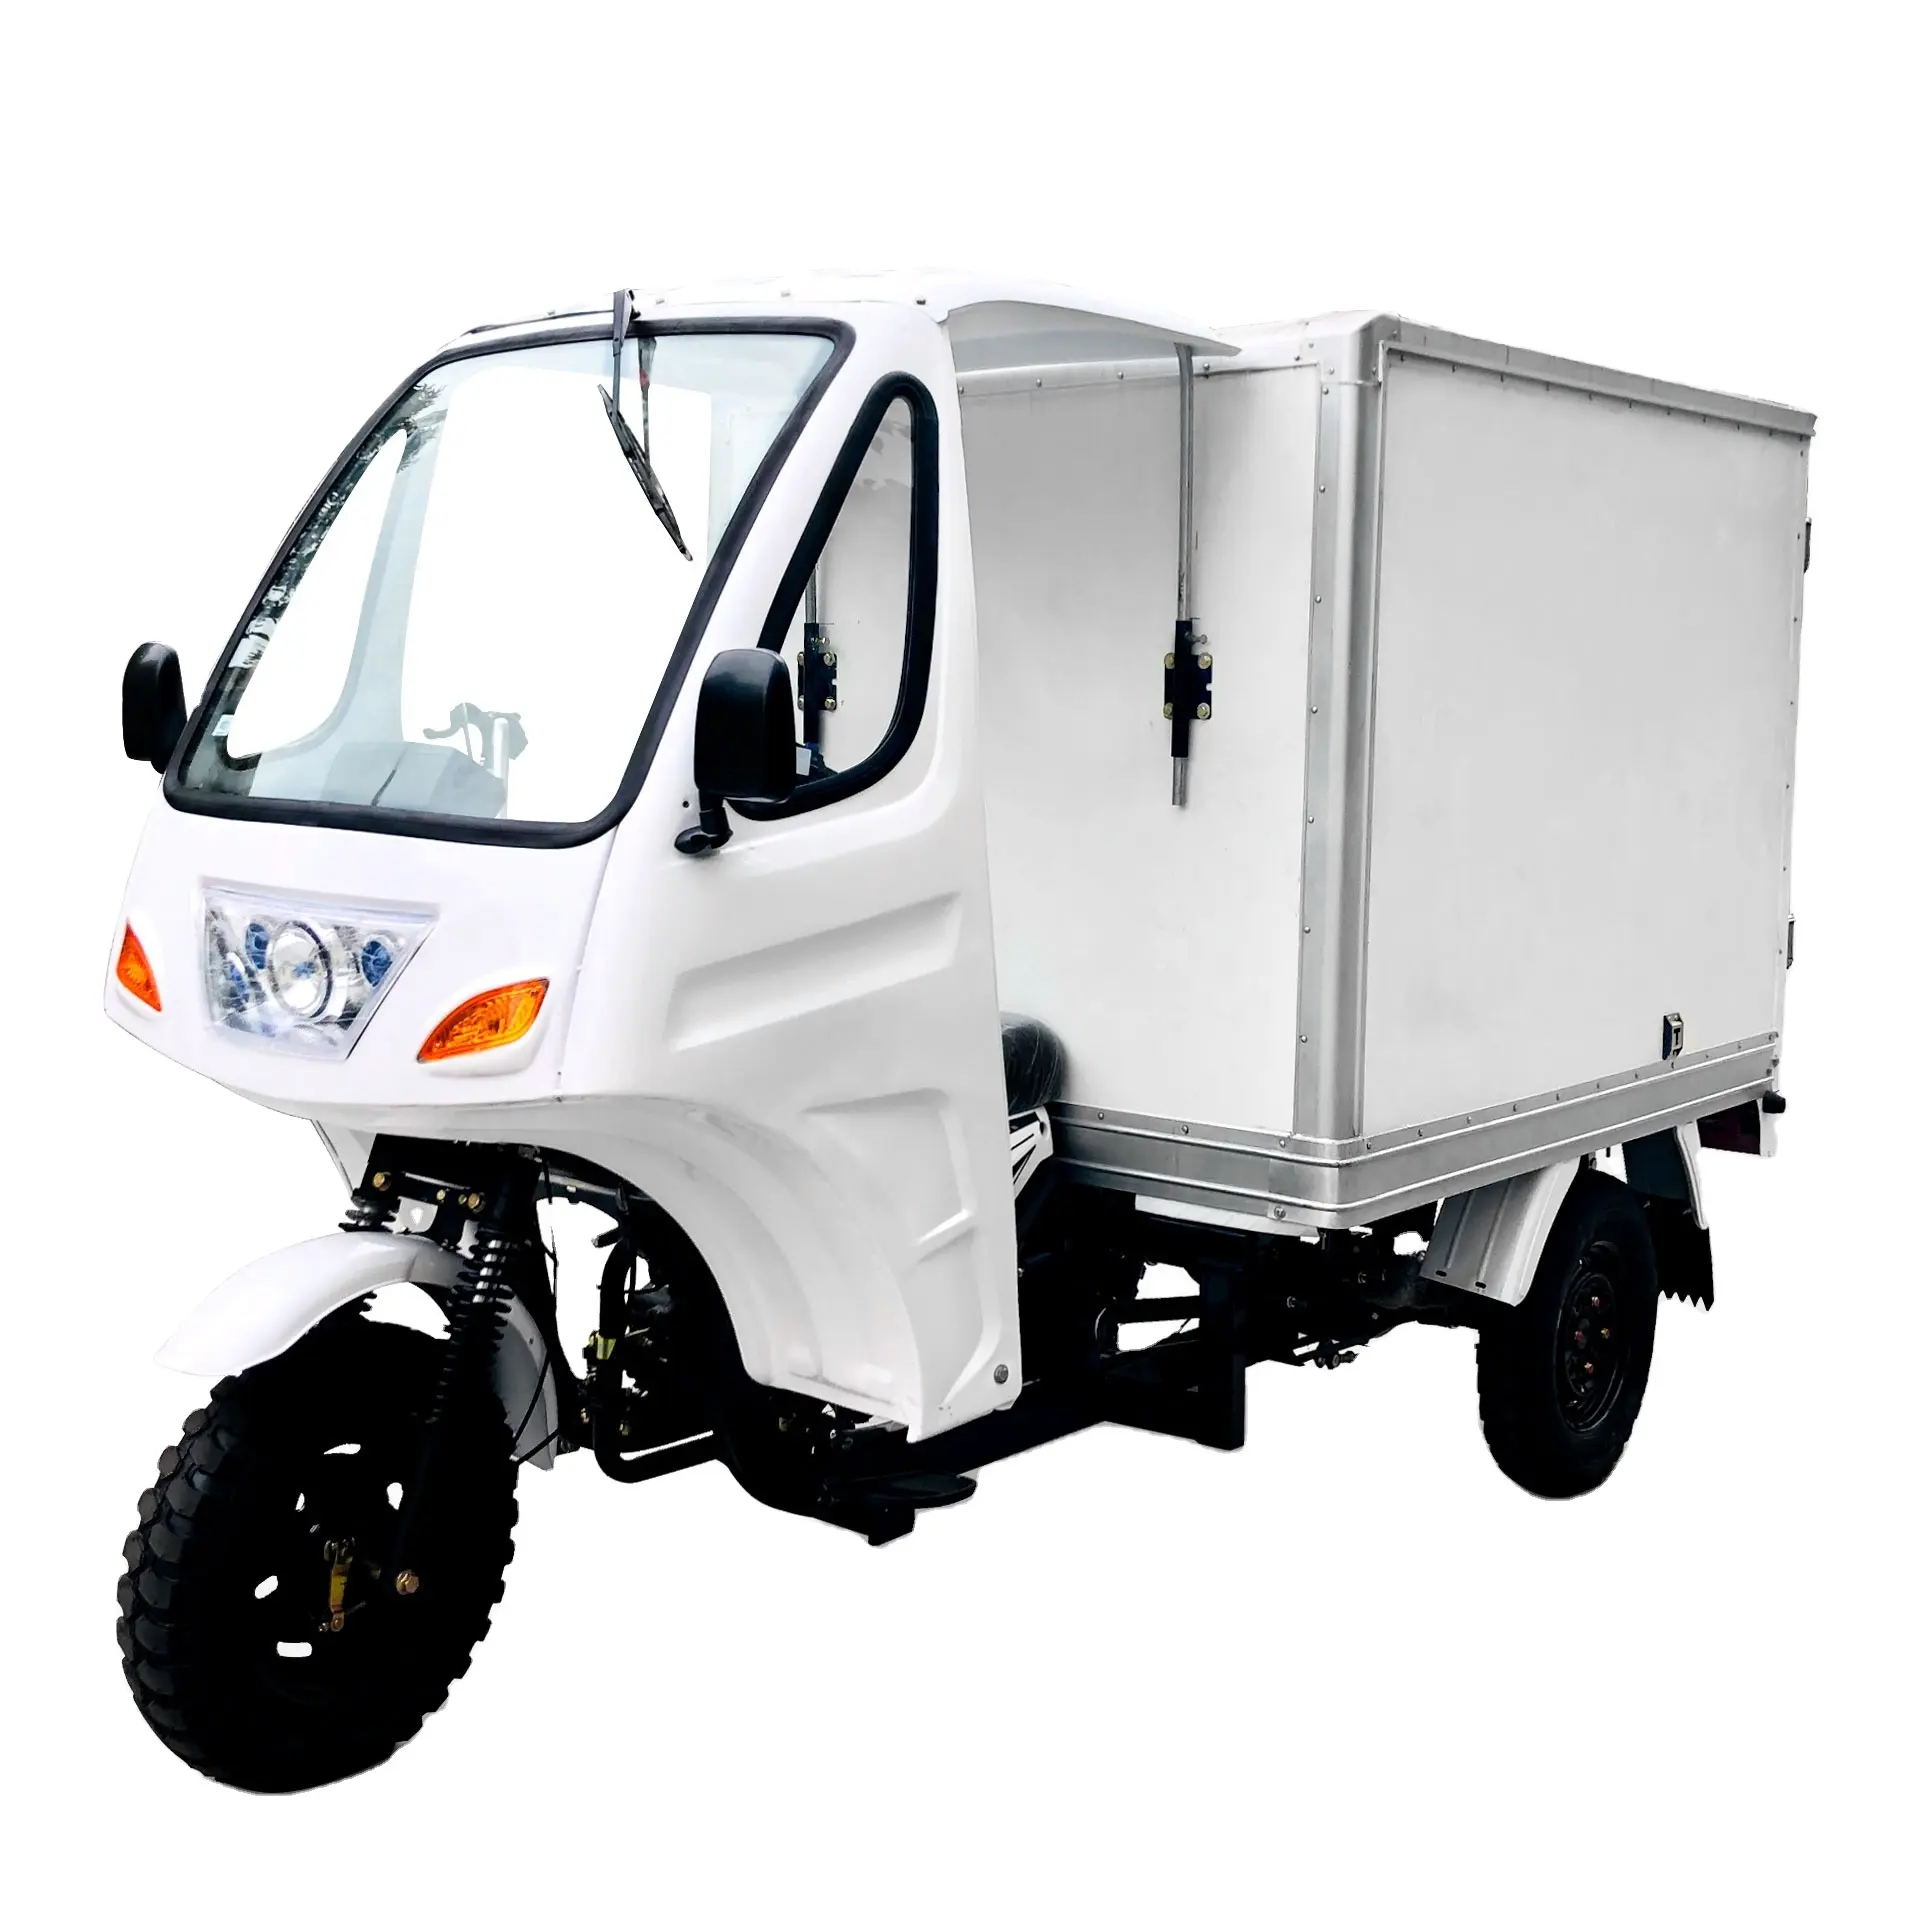 DAYANG ดีขายกล่อง Cargo รถสามล้อห้าล้ออีกต่อไปรถจักรยานยนต์เพลาสามล้อสีขาว Lifan Body กรอบกล่องแบตเตอรี่